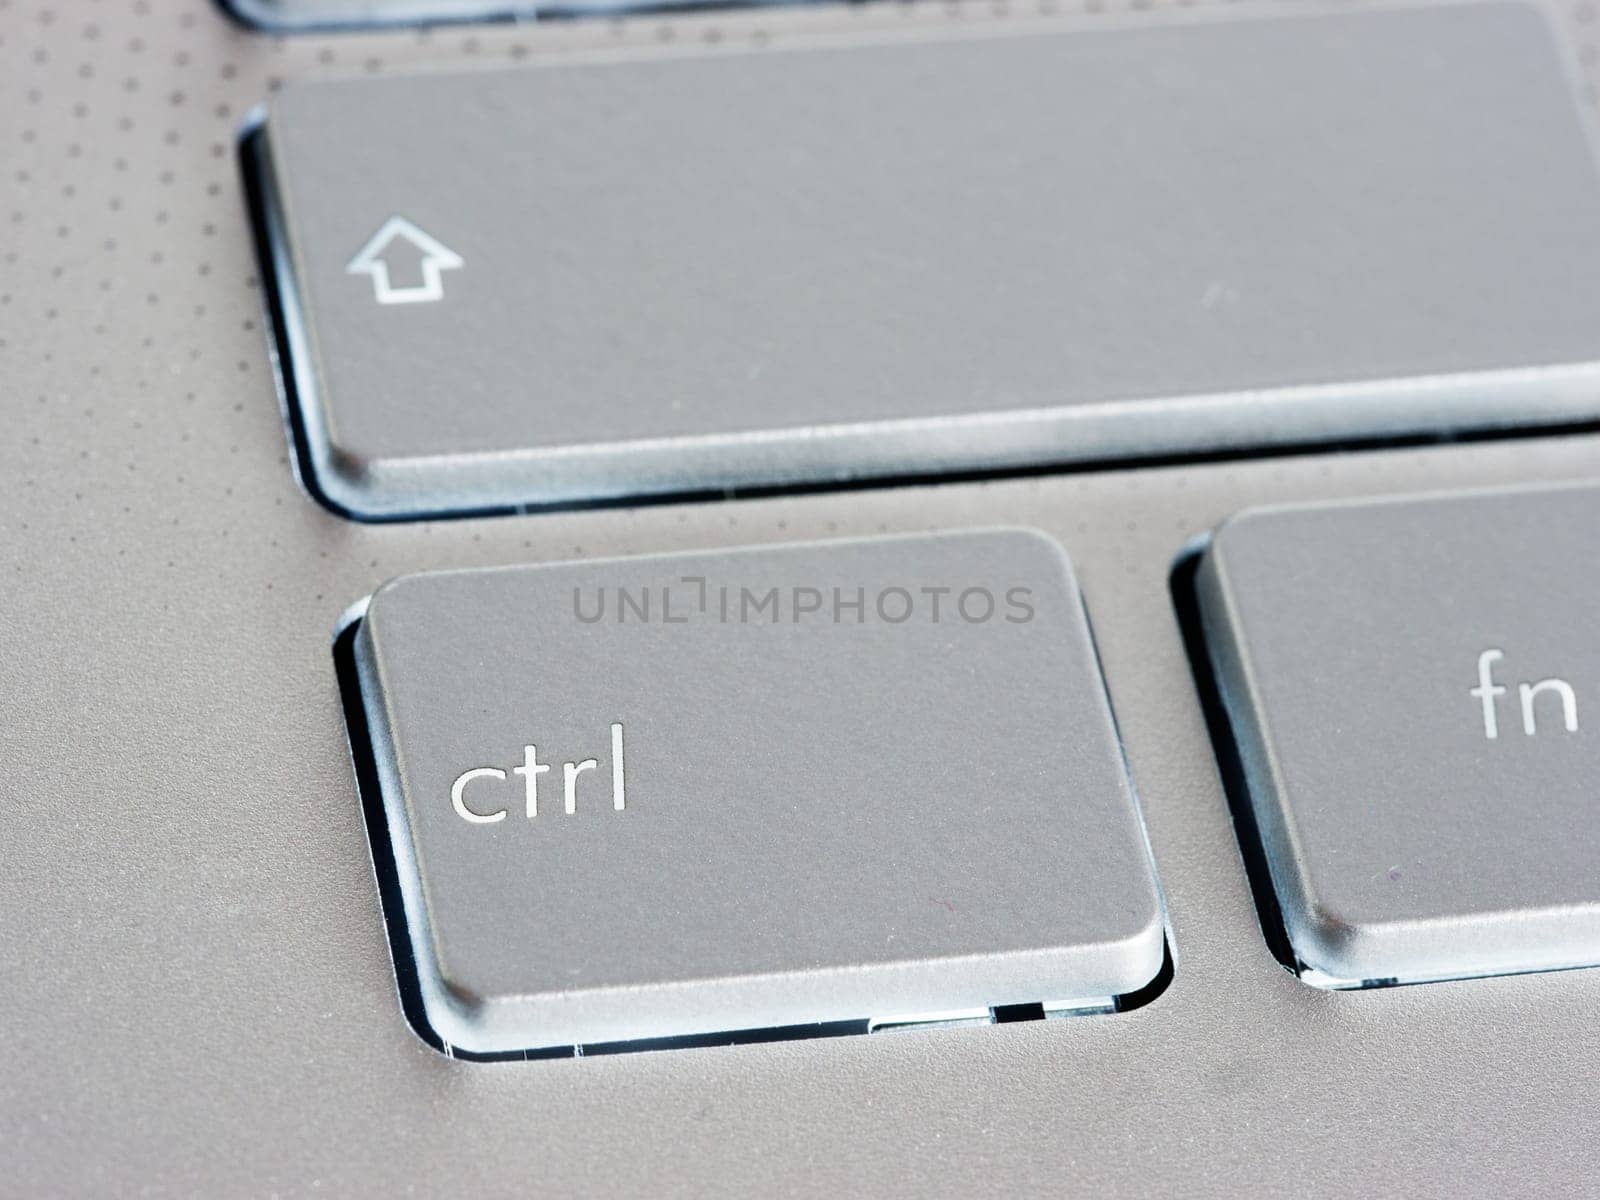 Ctrl - Control key on silver laptop keyboard by fascinadora